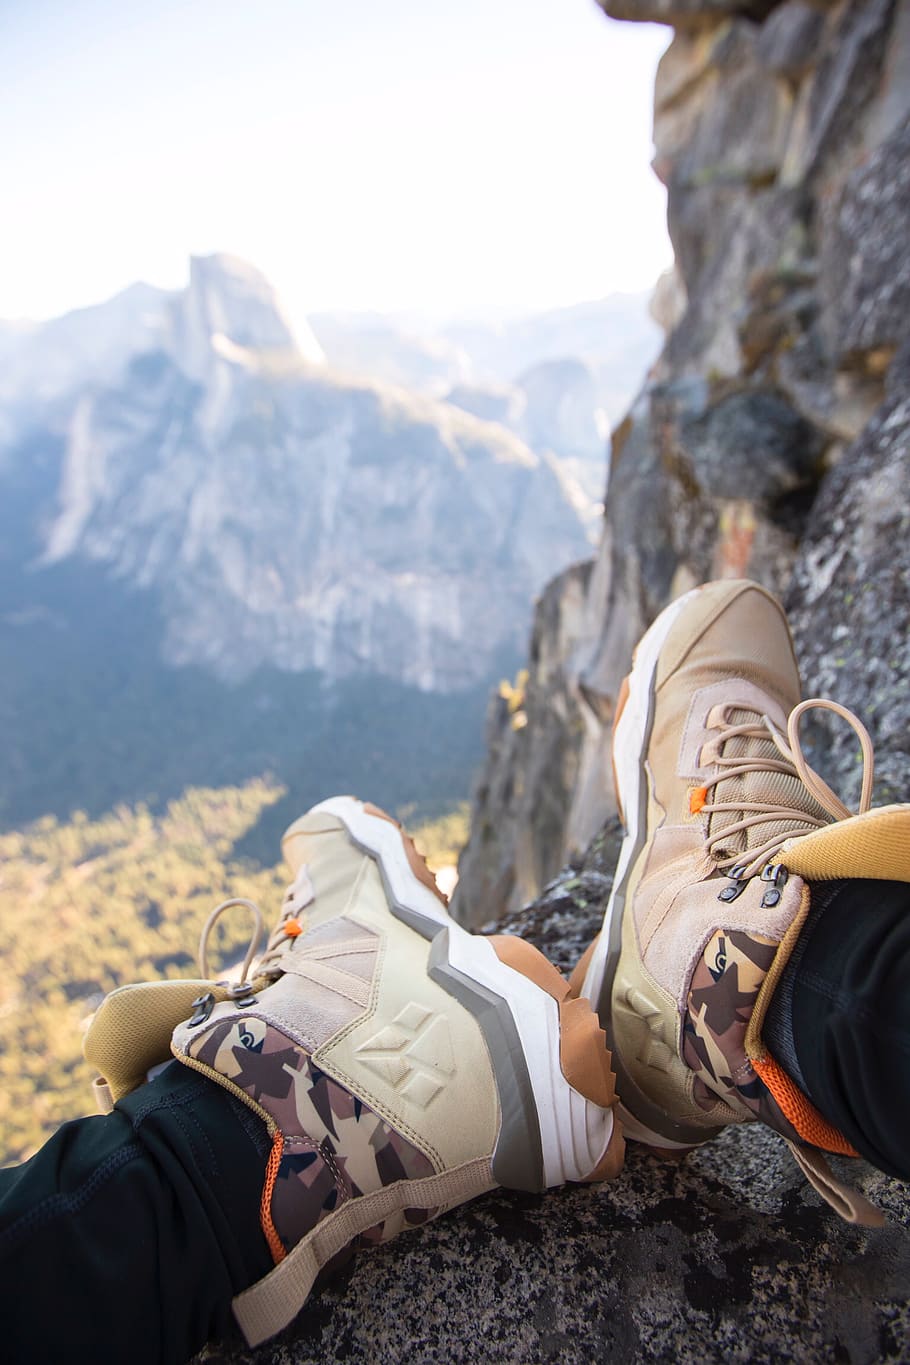 person sitting on rock near gray fault-block mountain, shoe, apparel